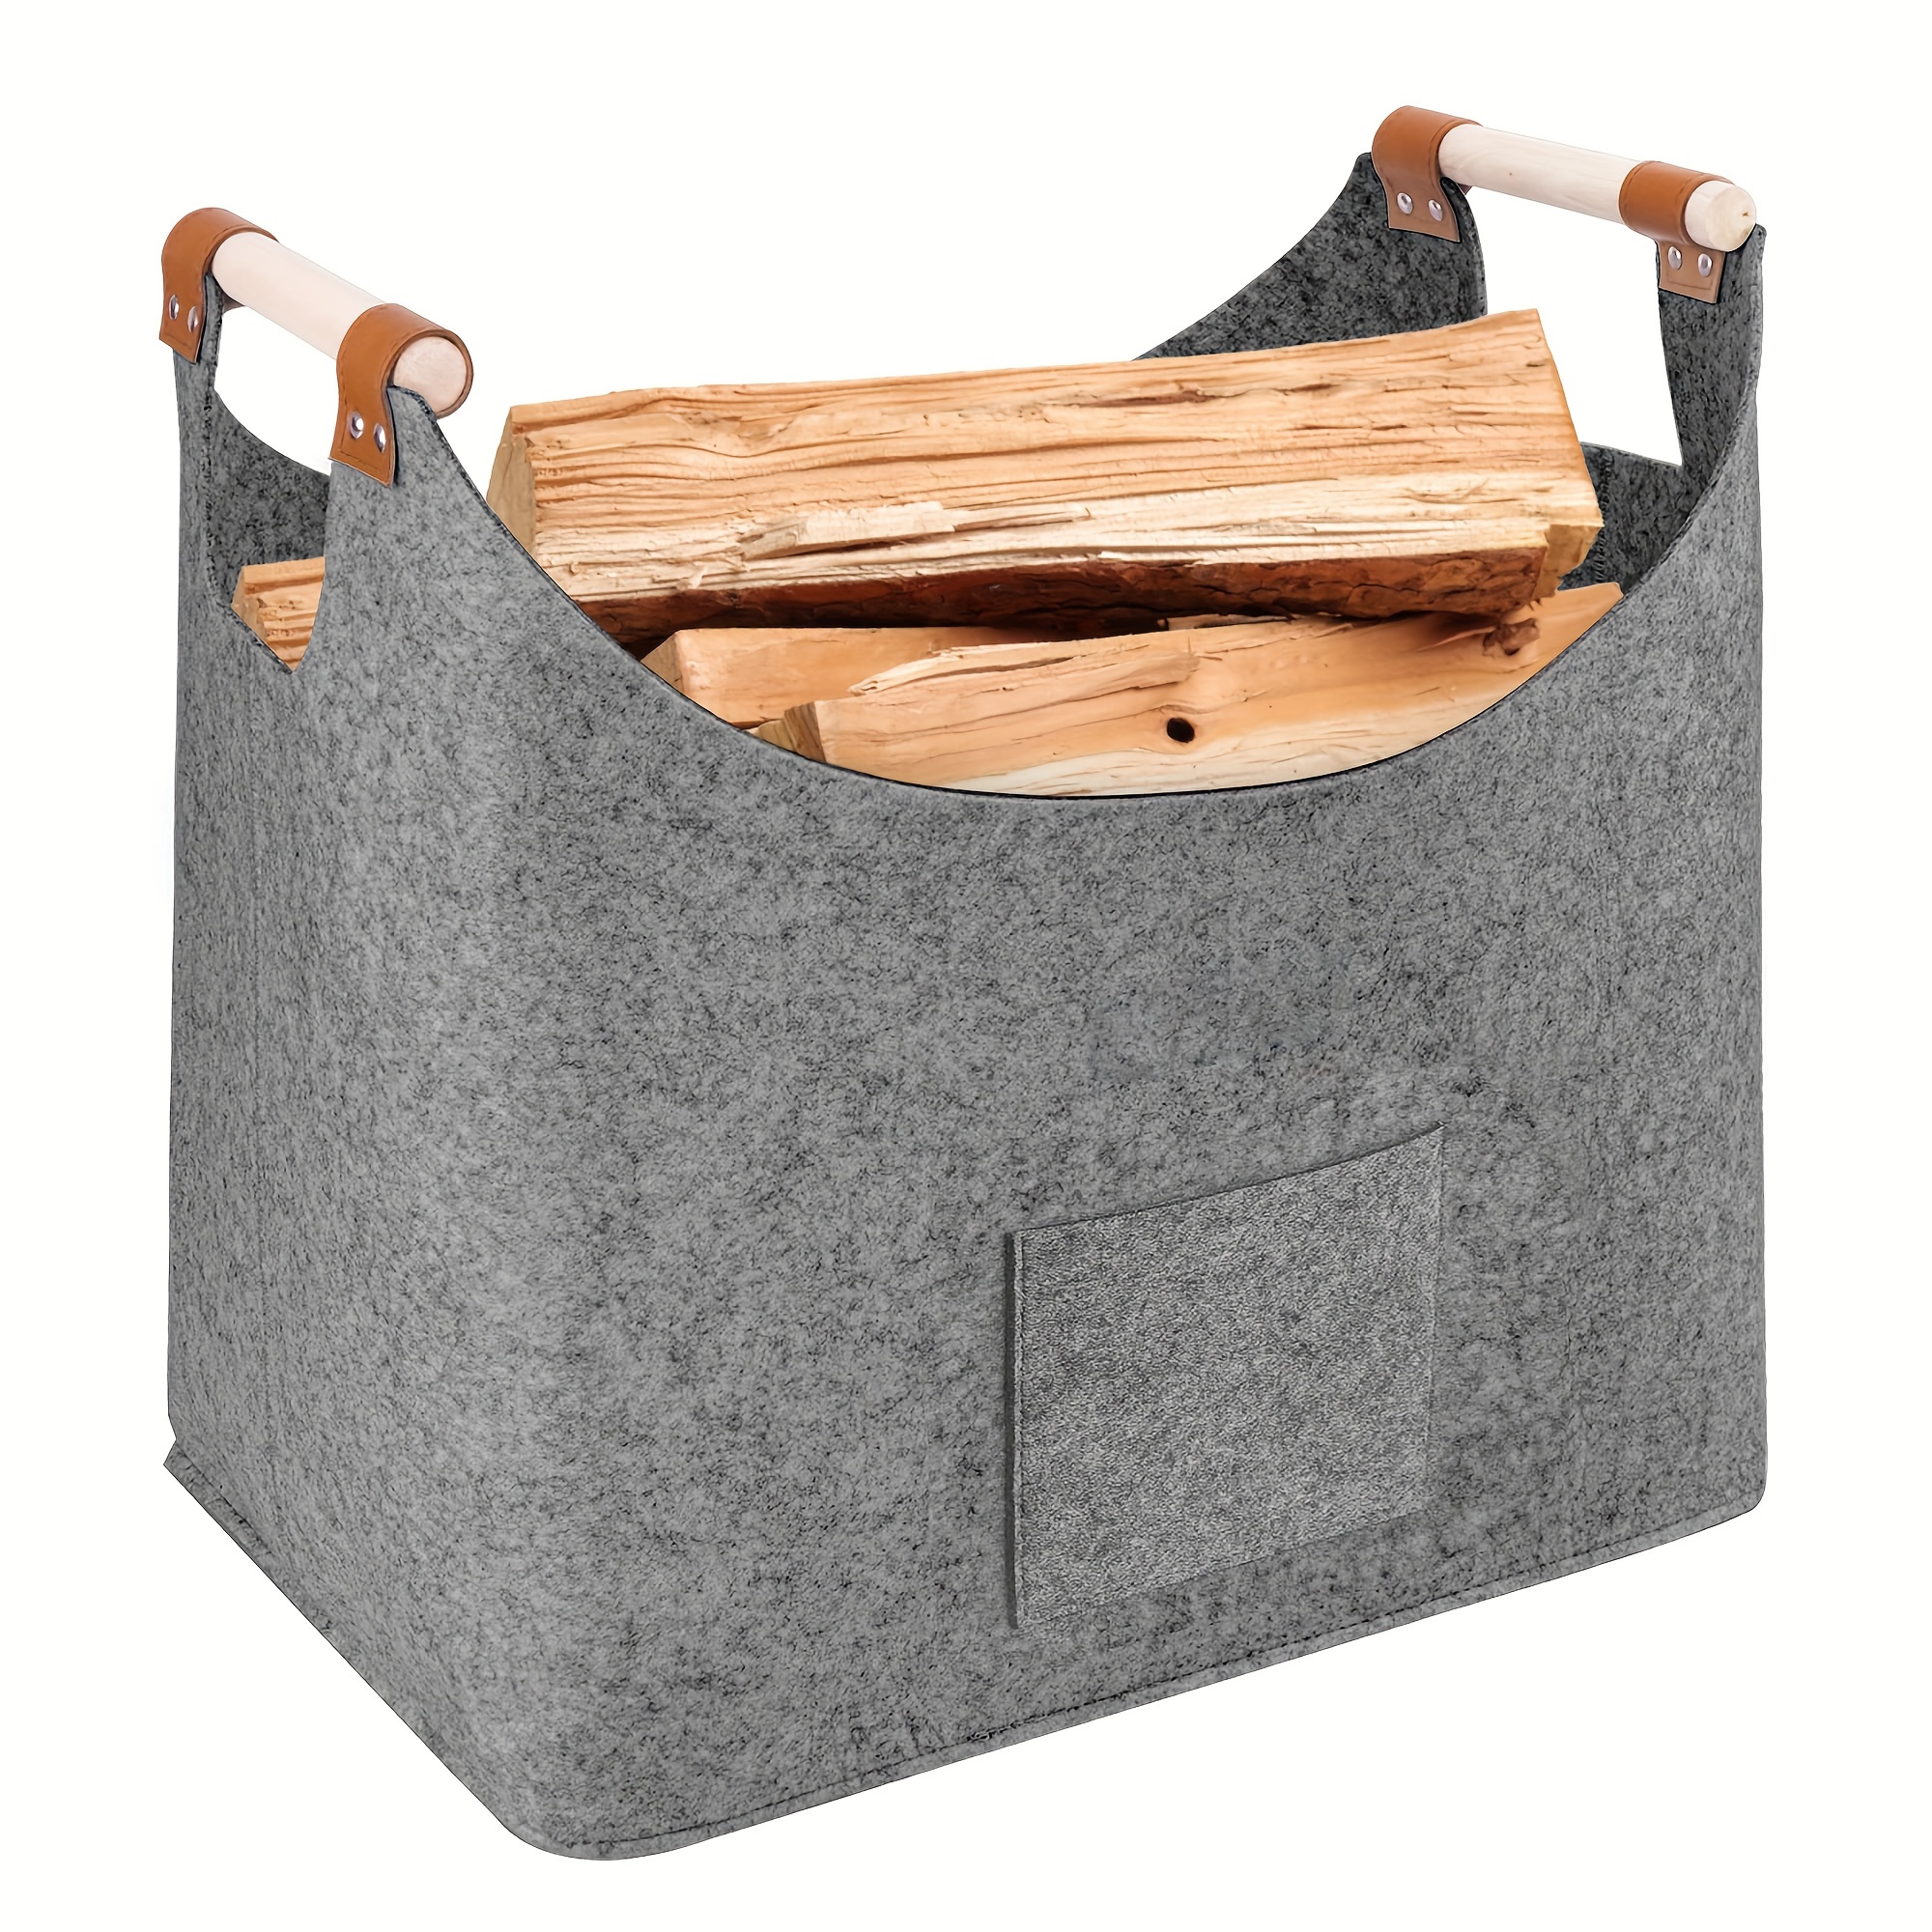 Felt Bag, Firewood Basket, Extra Thick Felt & Reinforced Handles